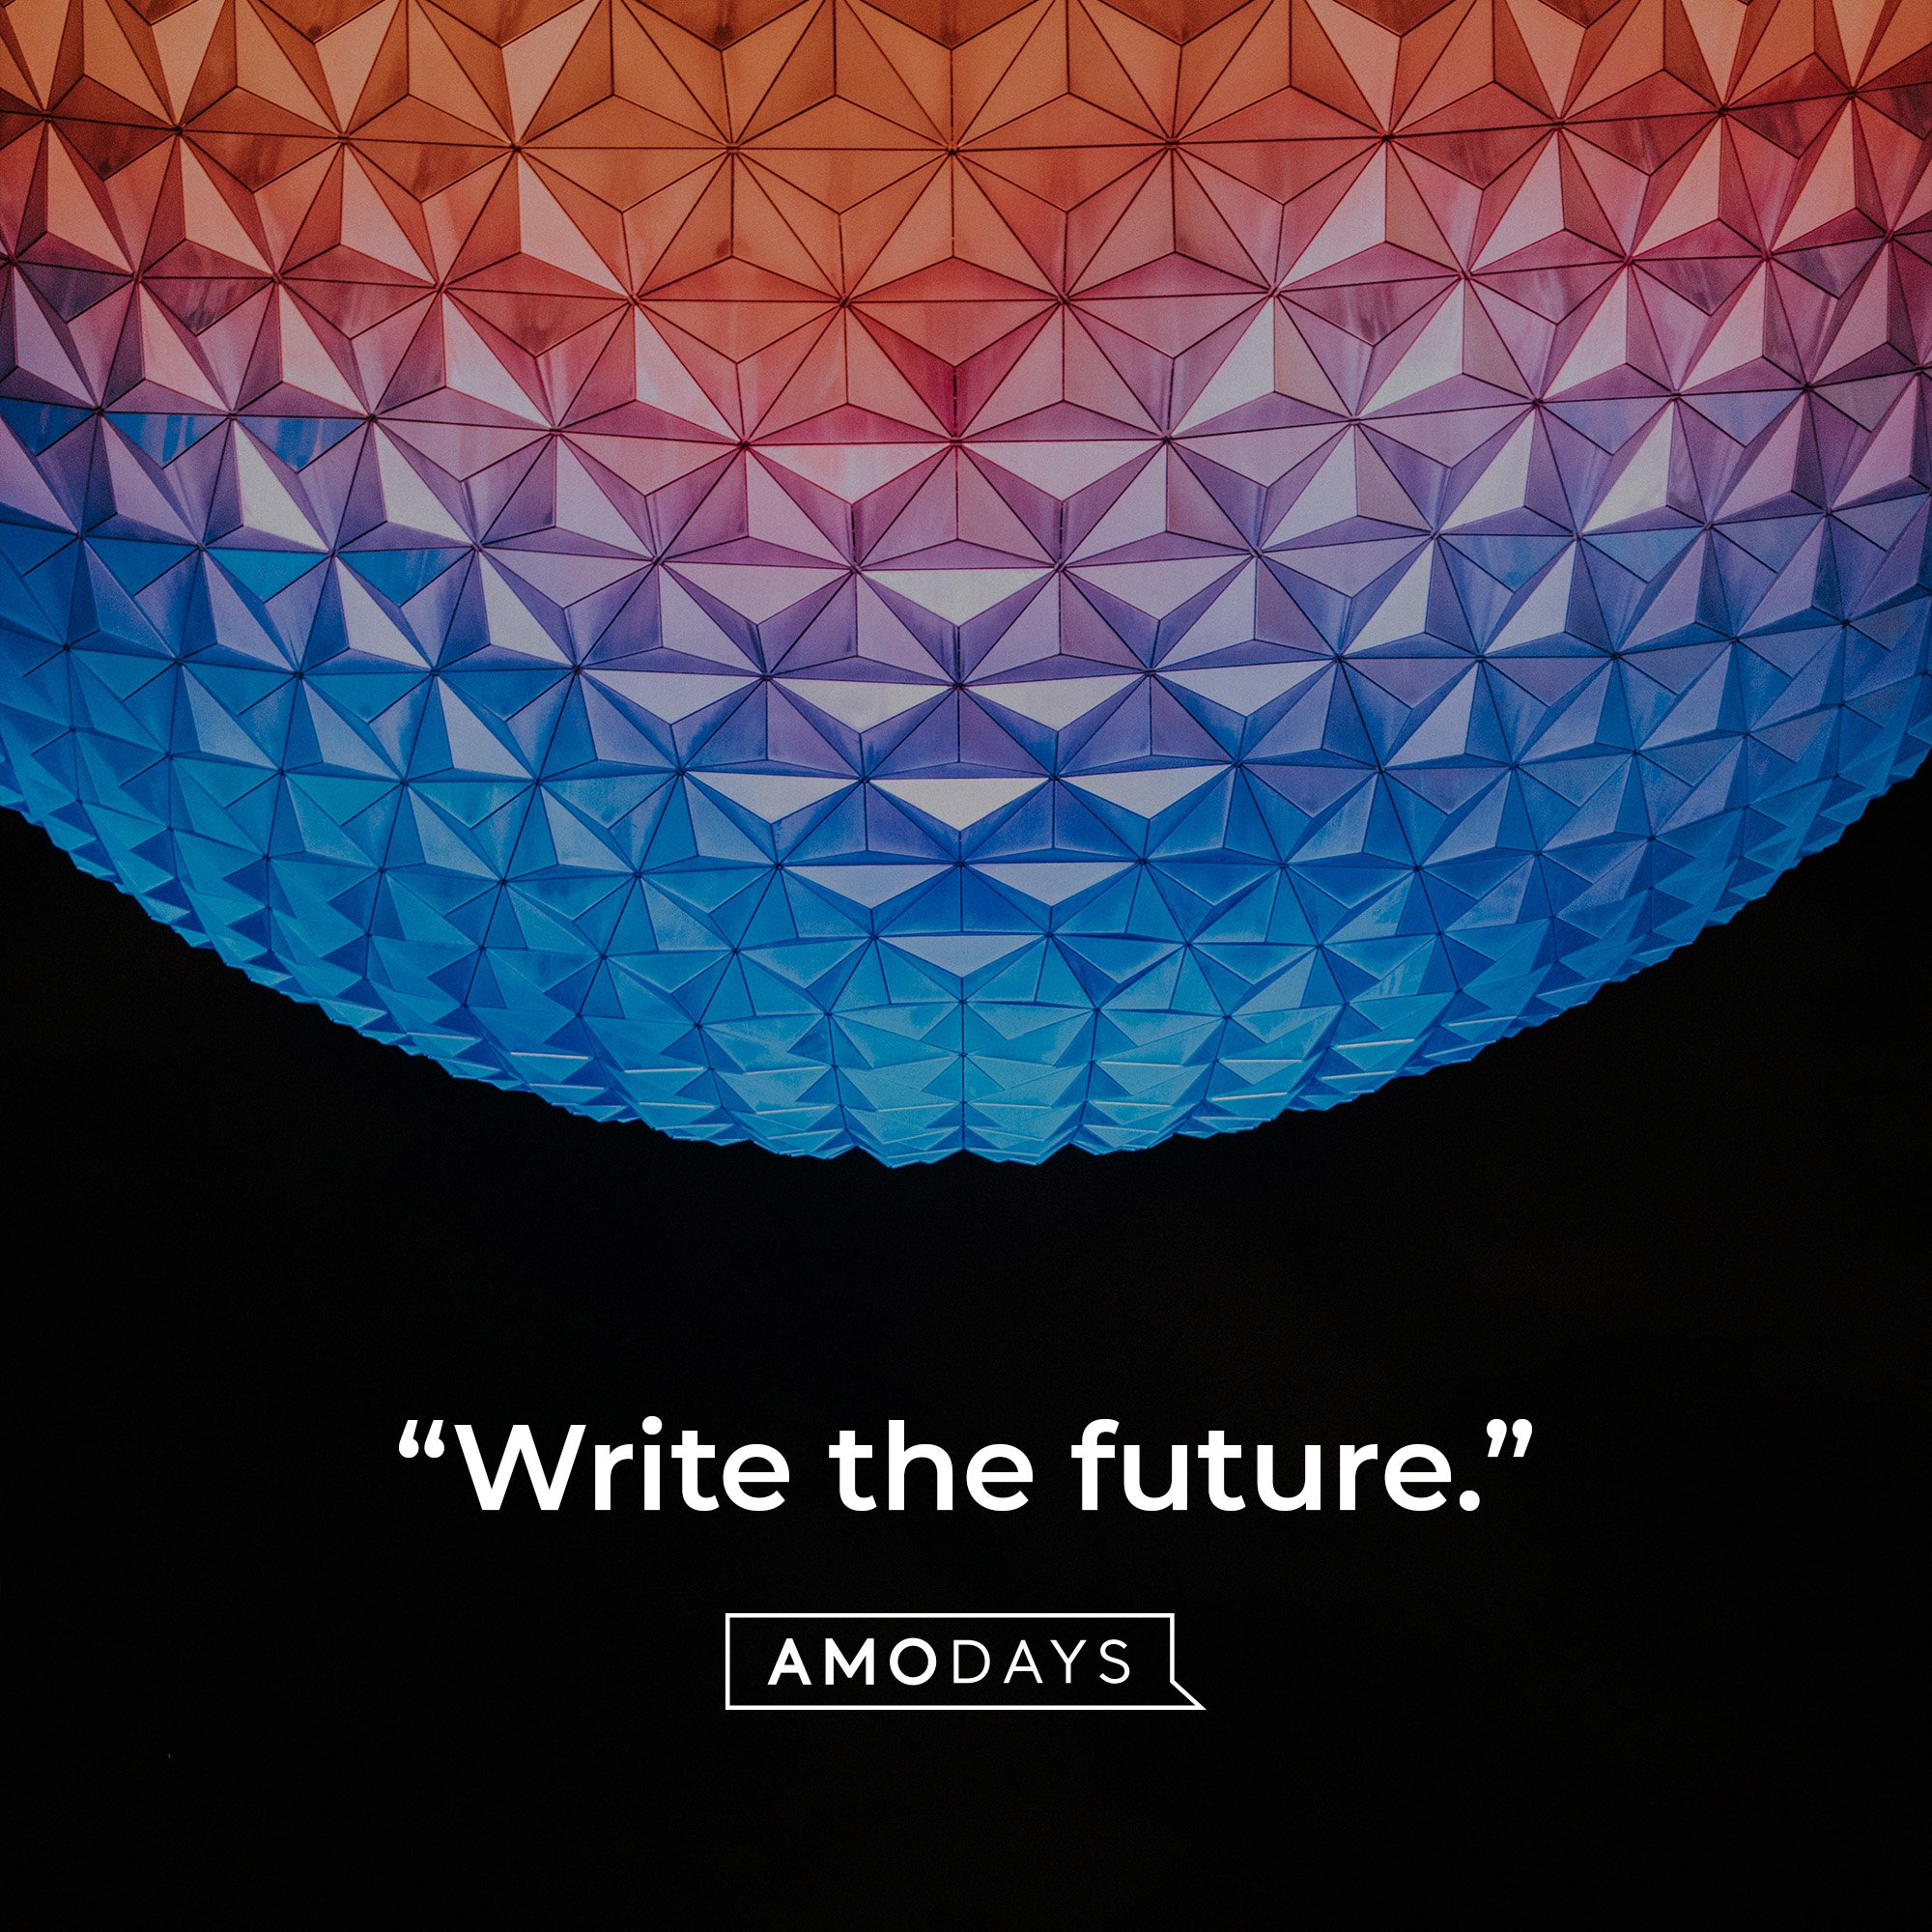 Nike’s quote: “Write the future.” | Source: AmoDays